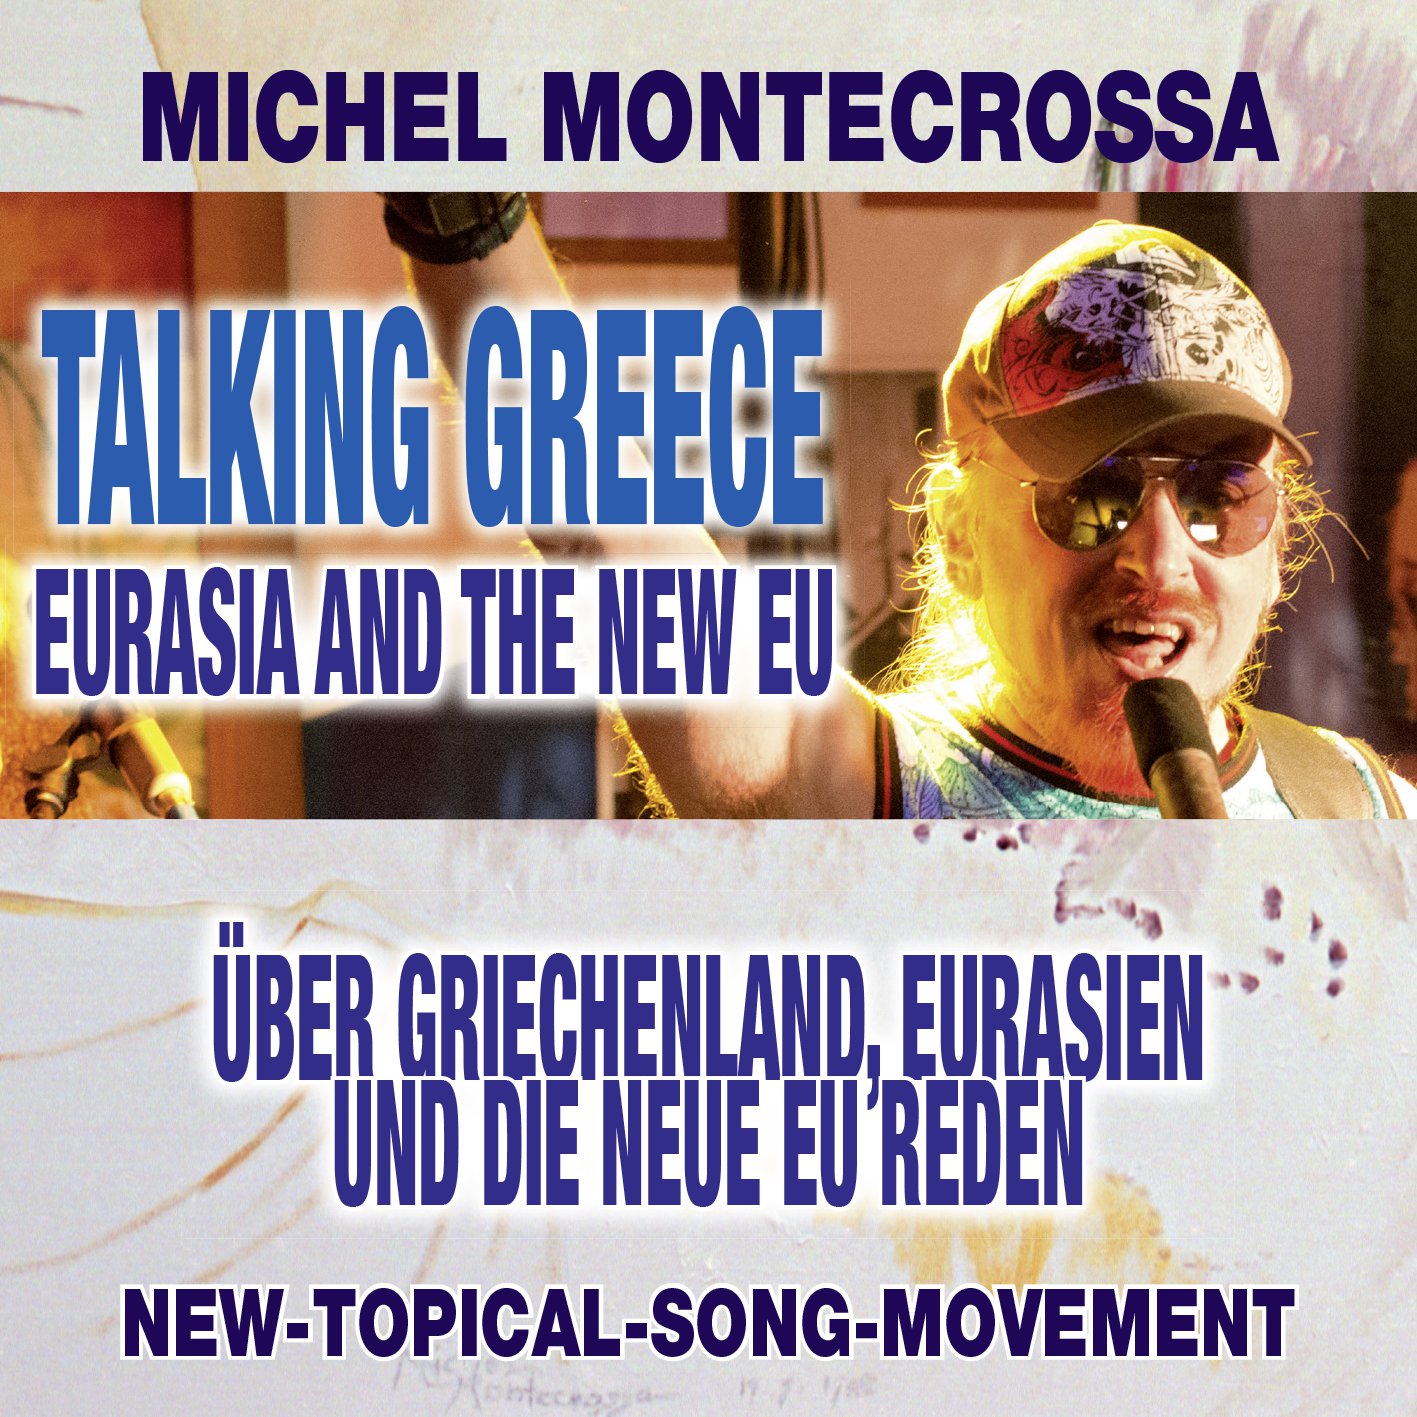 Talking Greece, Eurasia and the new EU